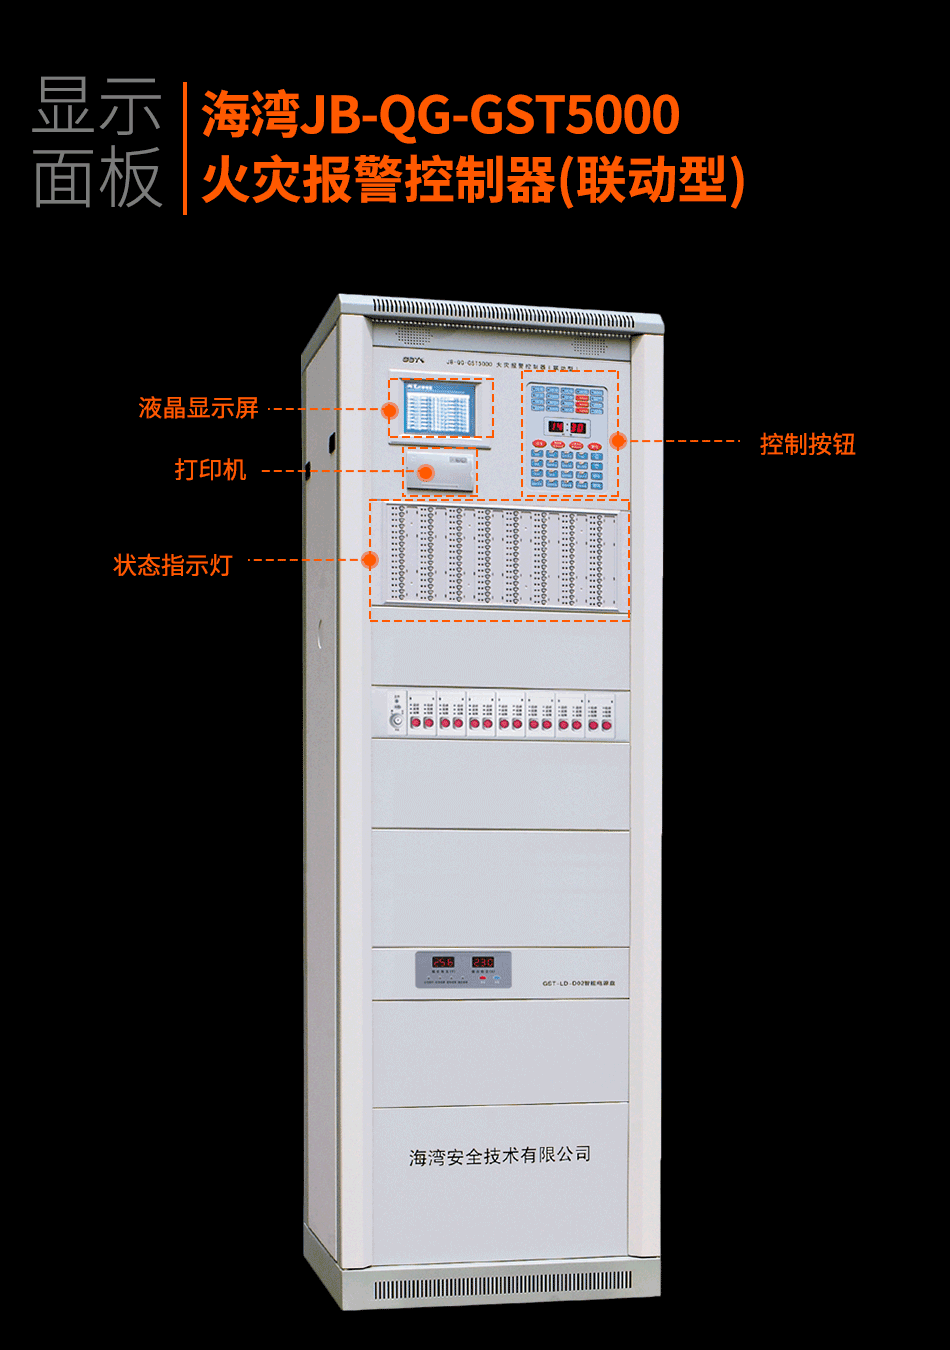 JB-QG-GST5000火灾报警控制器(联动型)显示面板